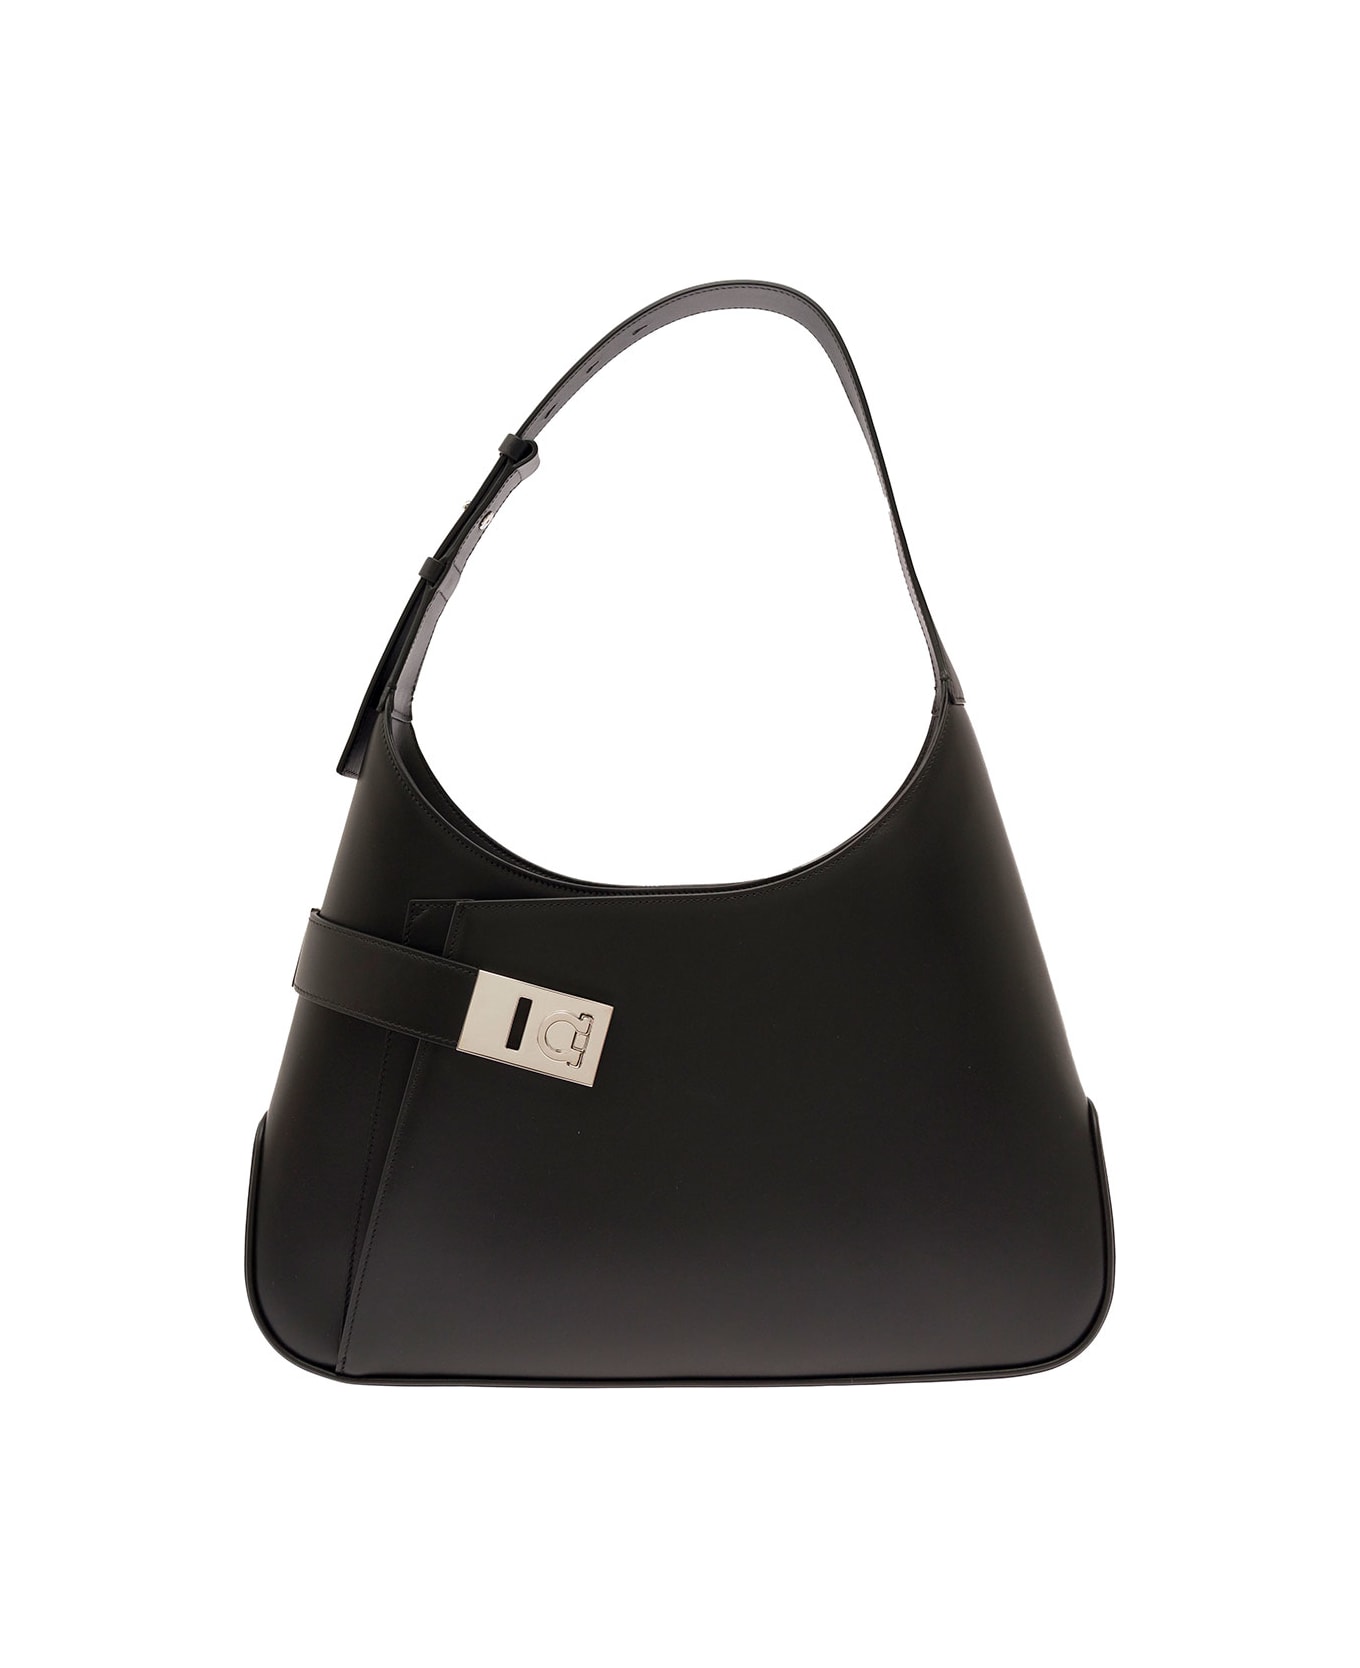 Ferragamo Black Hobo Shoulder Bag With Asymmetric Pocket And Gancini Buckle In Leather Woman - Black トートバッグ